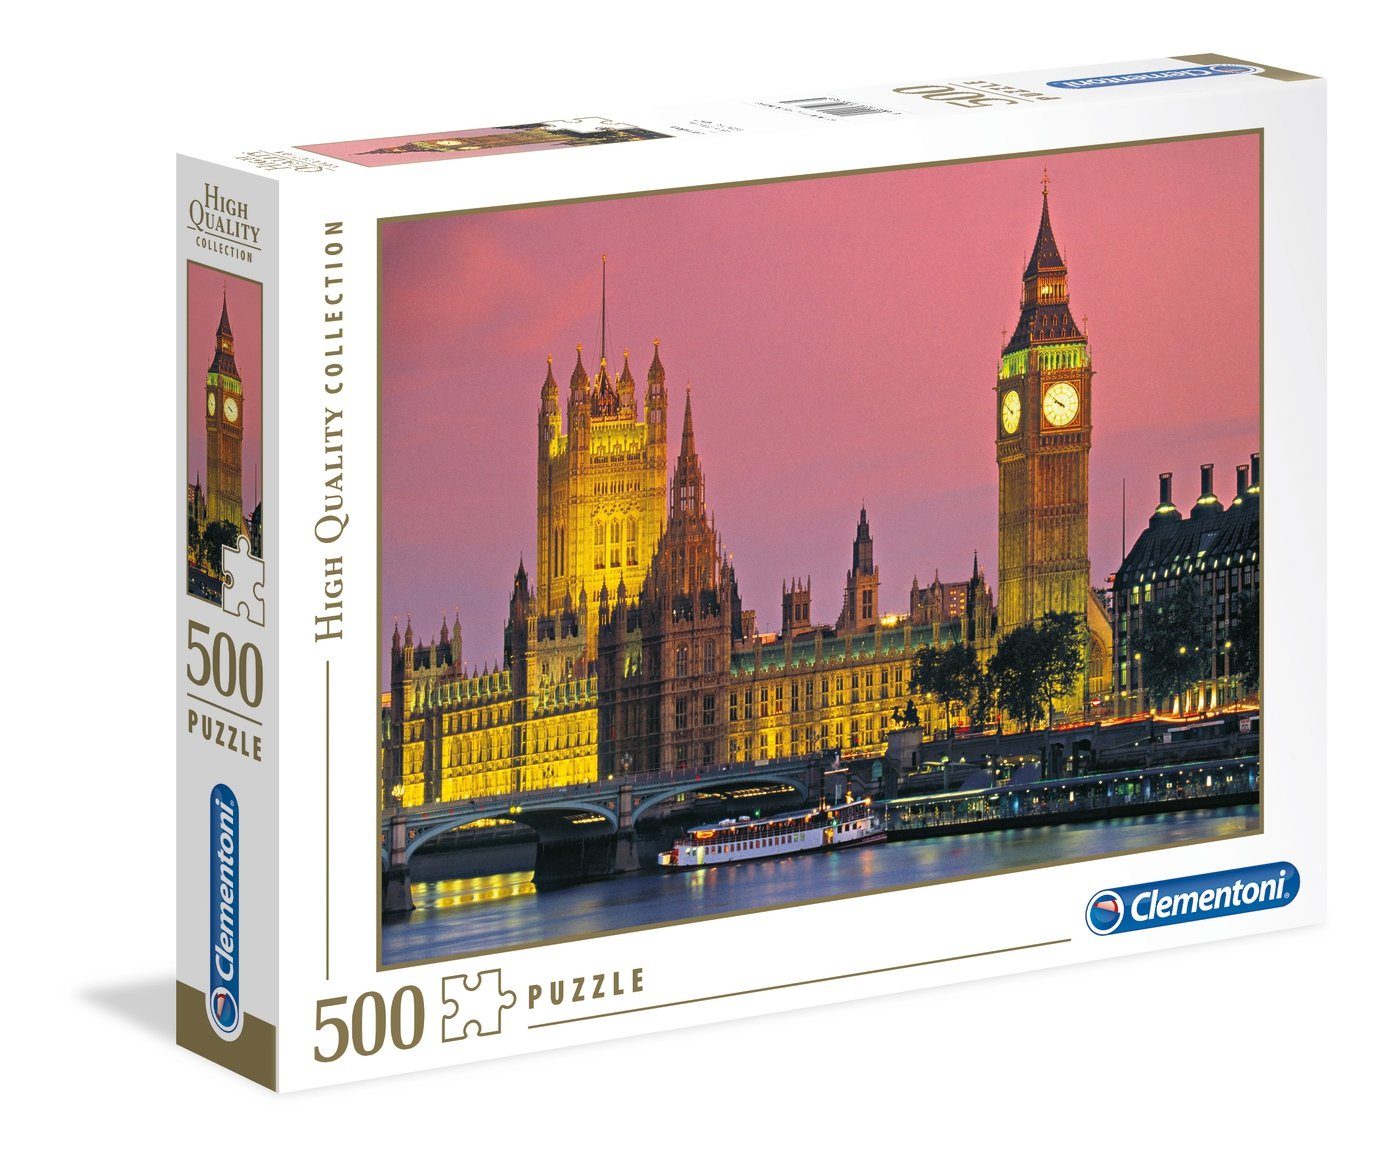 Clementoni® Puzzle Clementoni 500 Puzzle, 30378 Puzzleteile Teile 500 London